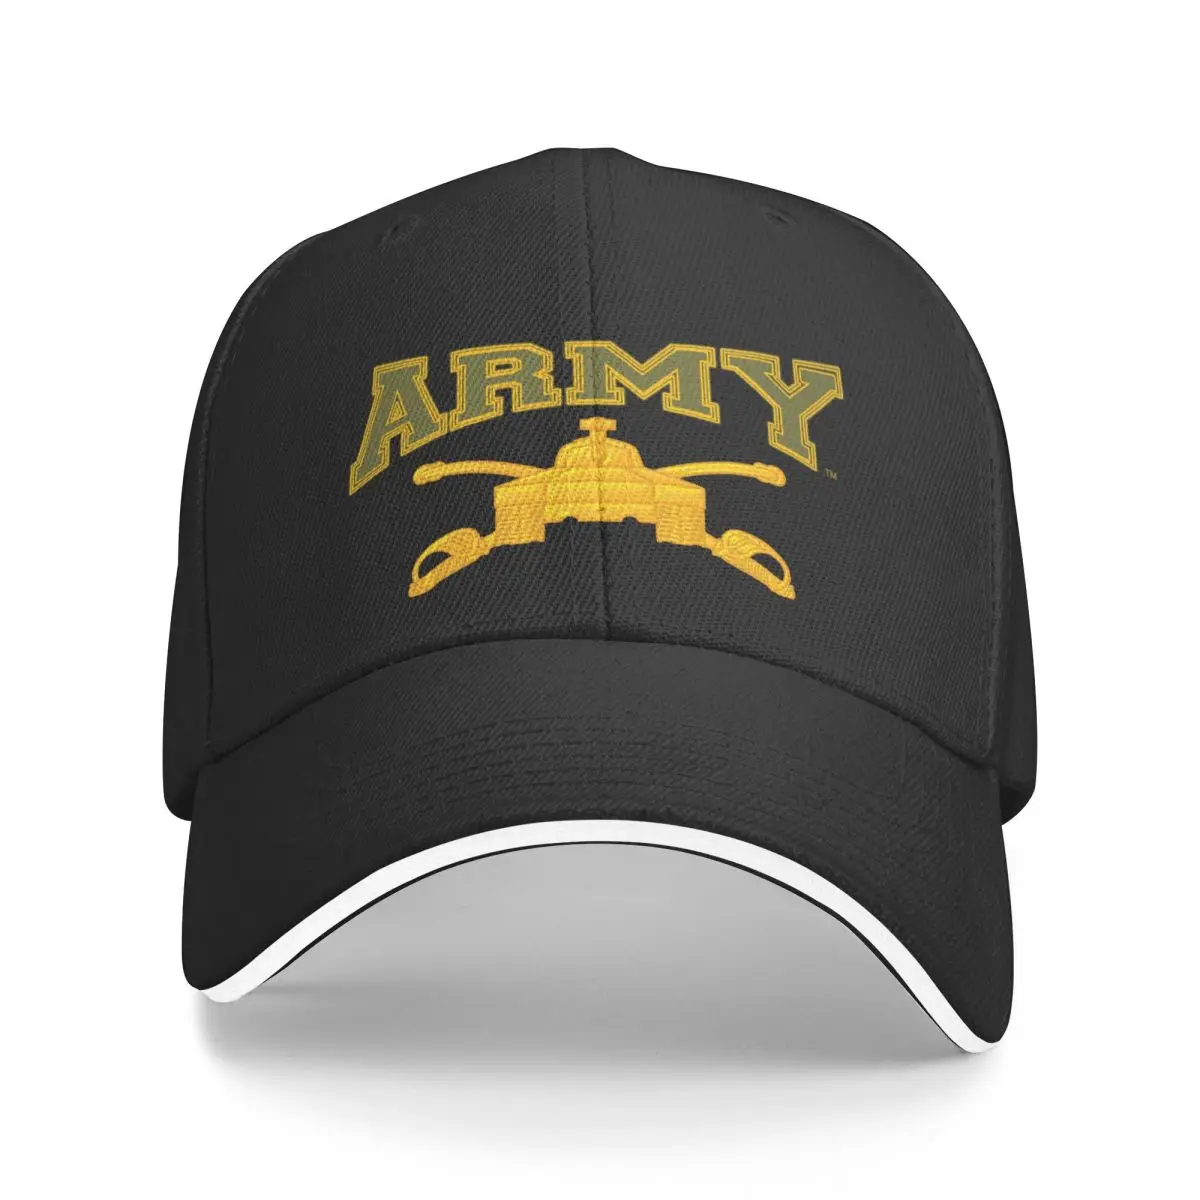 

New Army - Armor Branch Baseball Cap black Military Tactical Cap Hat Luxury Brand boonie hats Men's Cap Women's